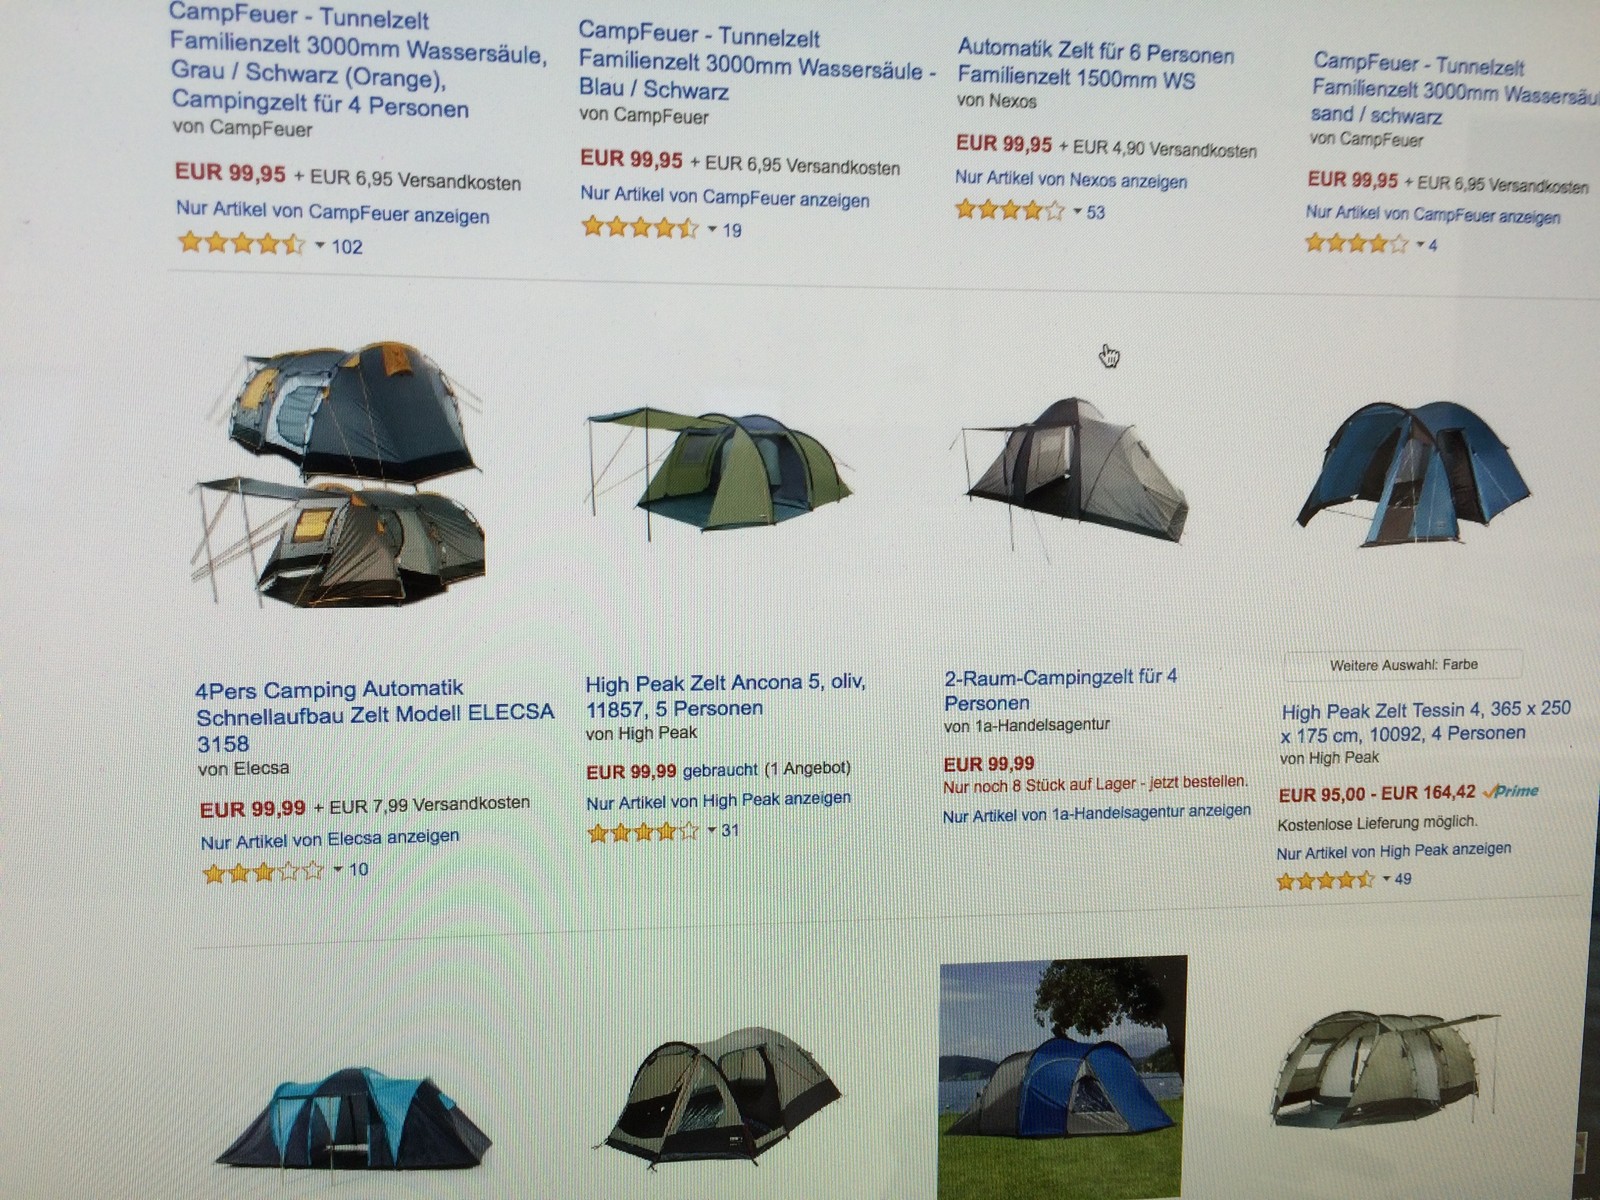 Nexos Automatik Zelt für 6 Personen Familienzelt 1500mm WS Campingzelt 